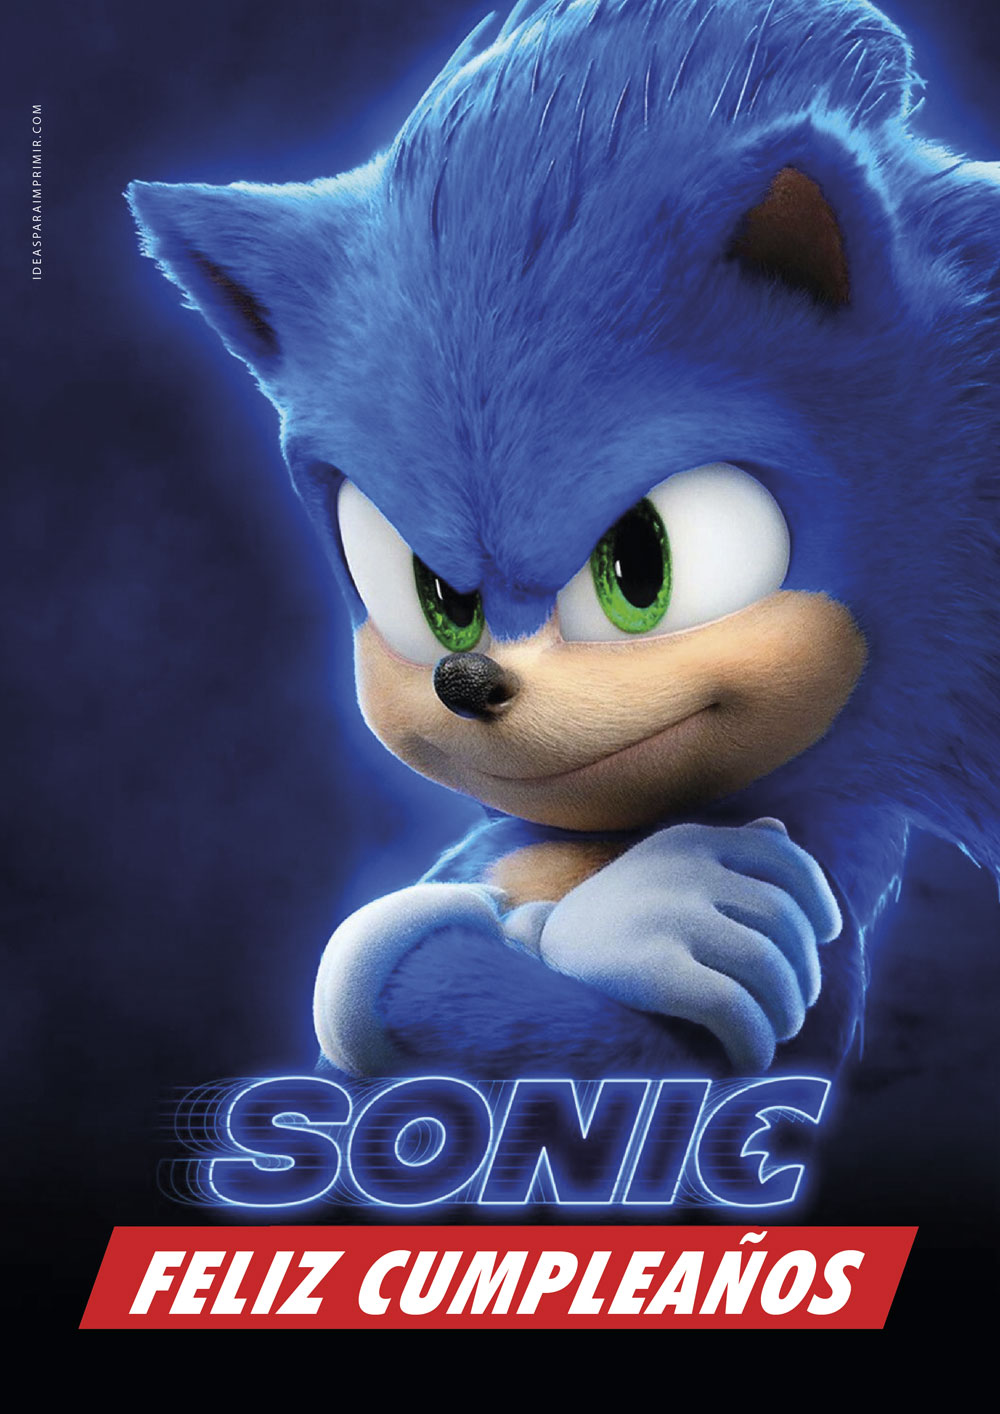 Poster o Cartel de Feliz Cumpleaños de Sonic